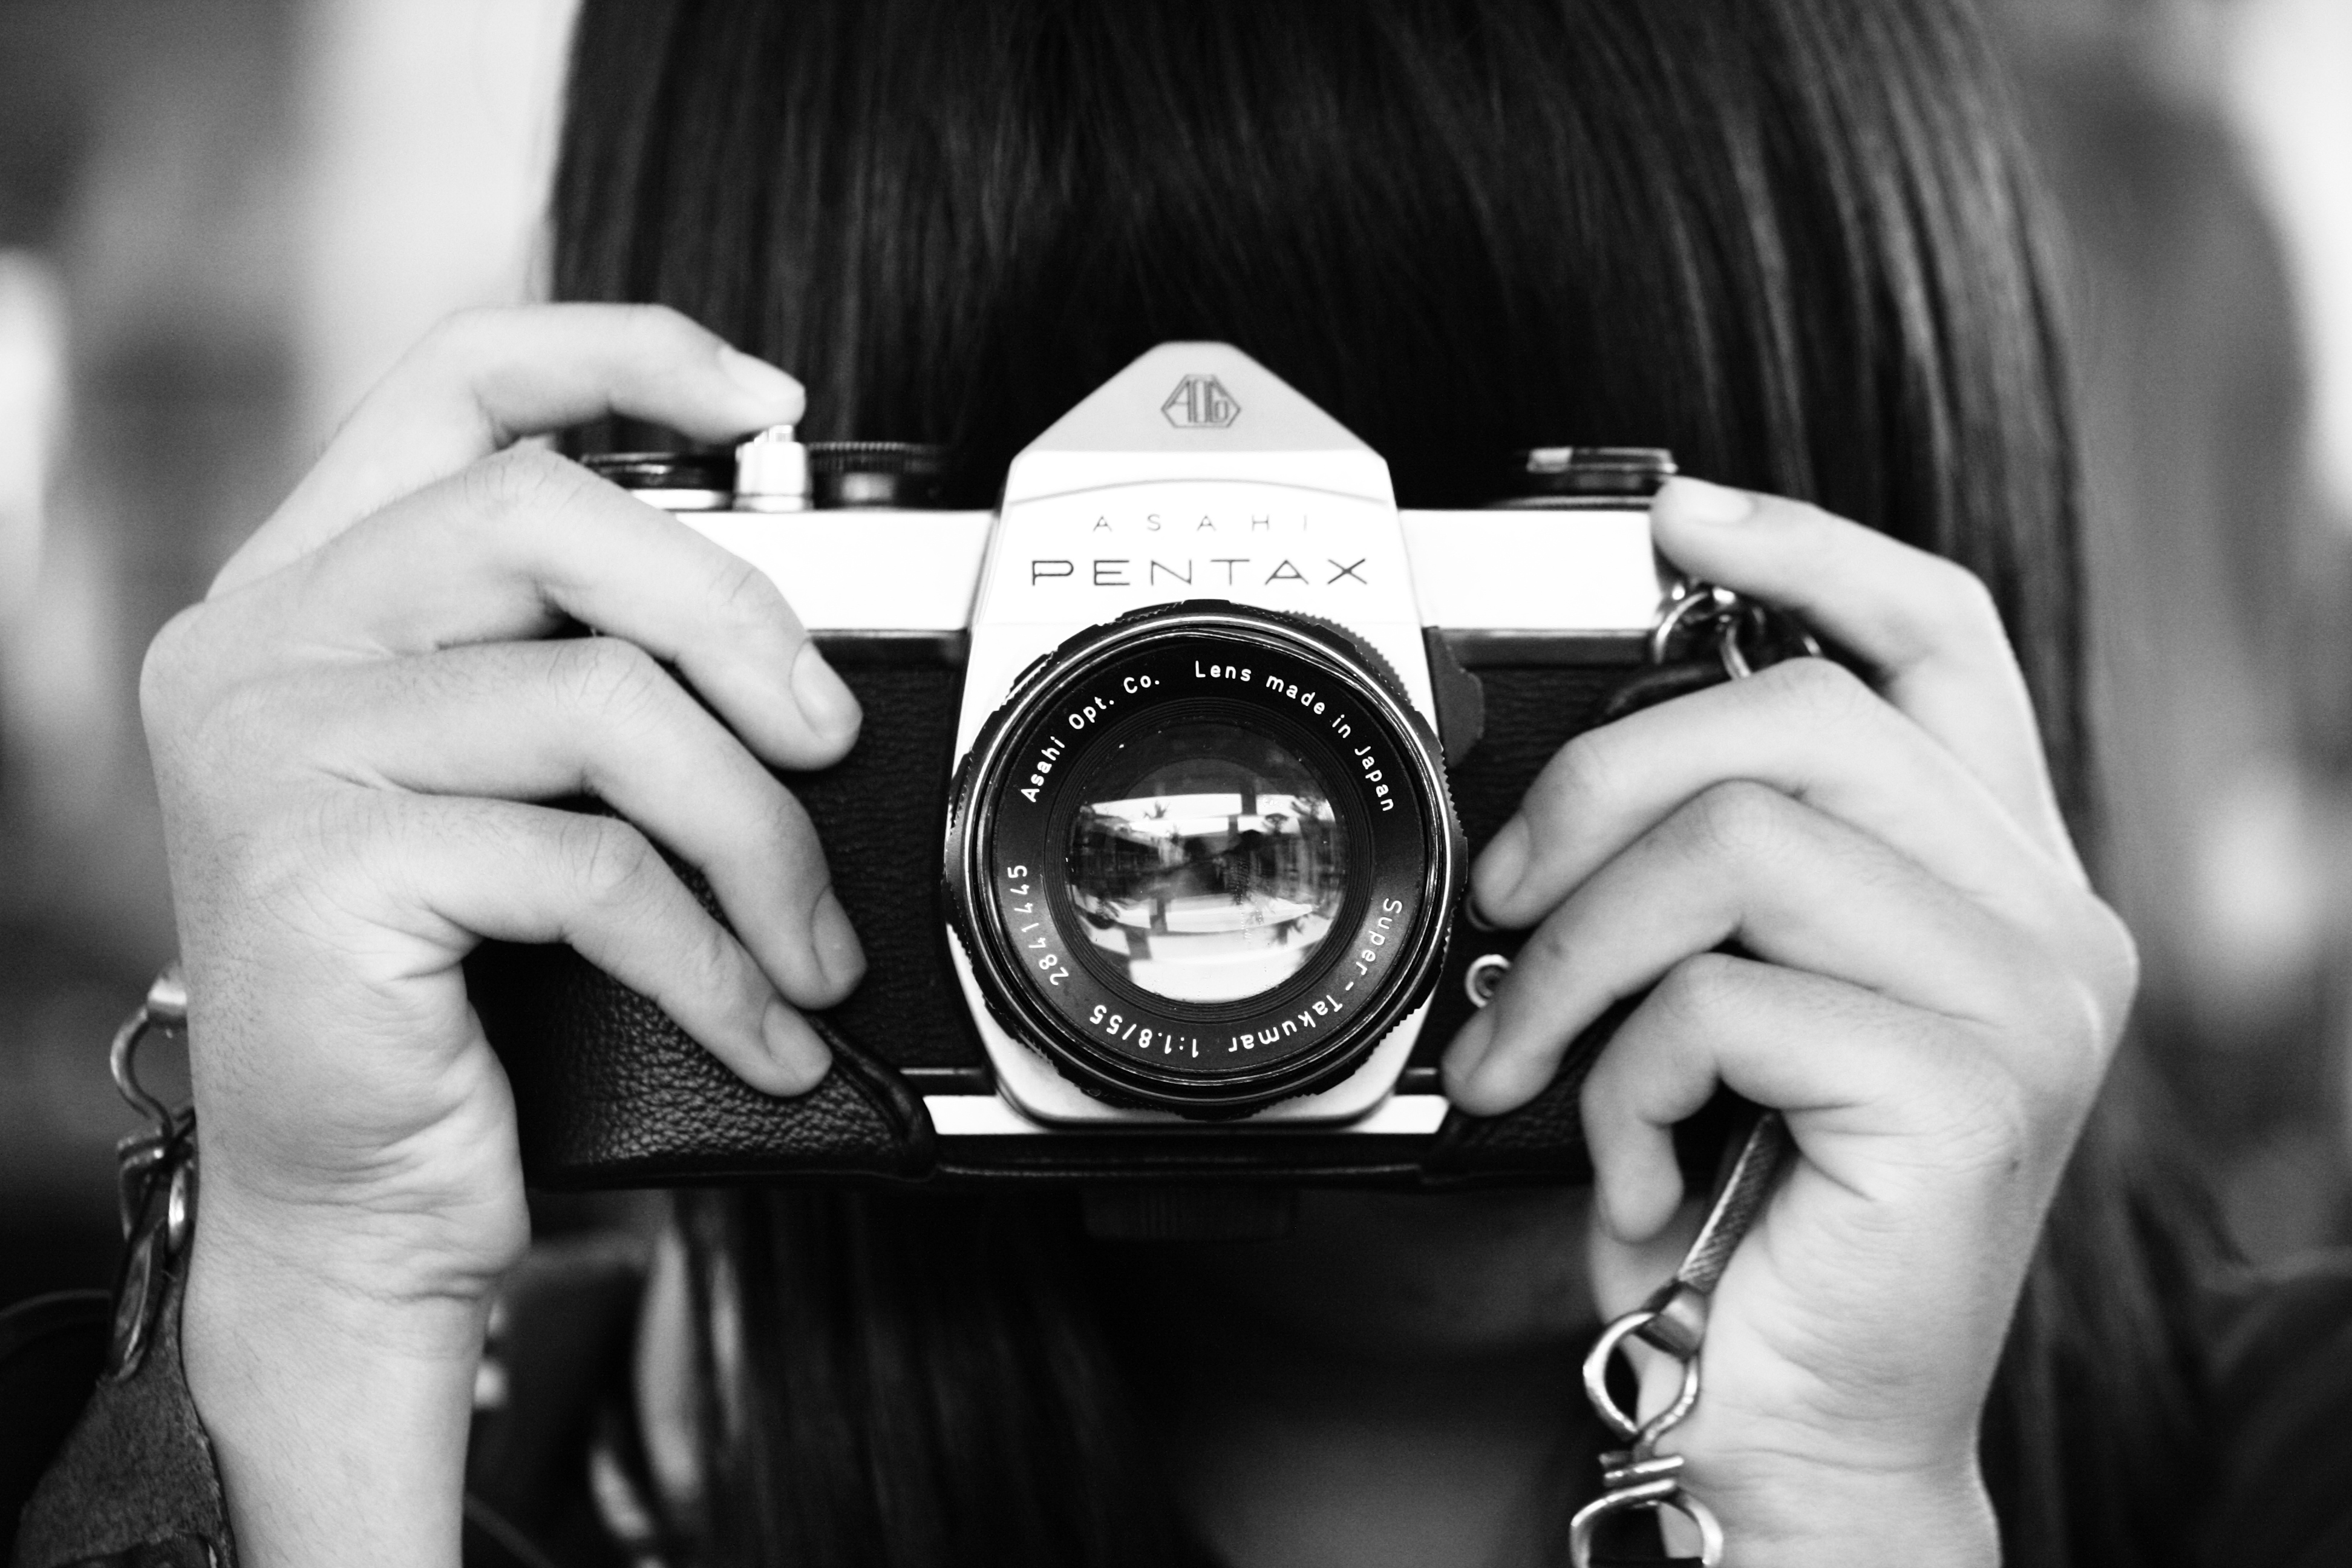 Images Gratuites : photographier, Point and shoot camera, Caméras ...